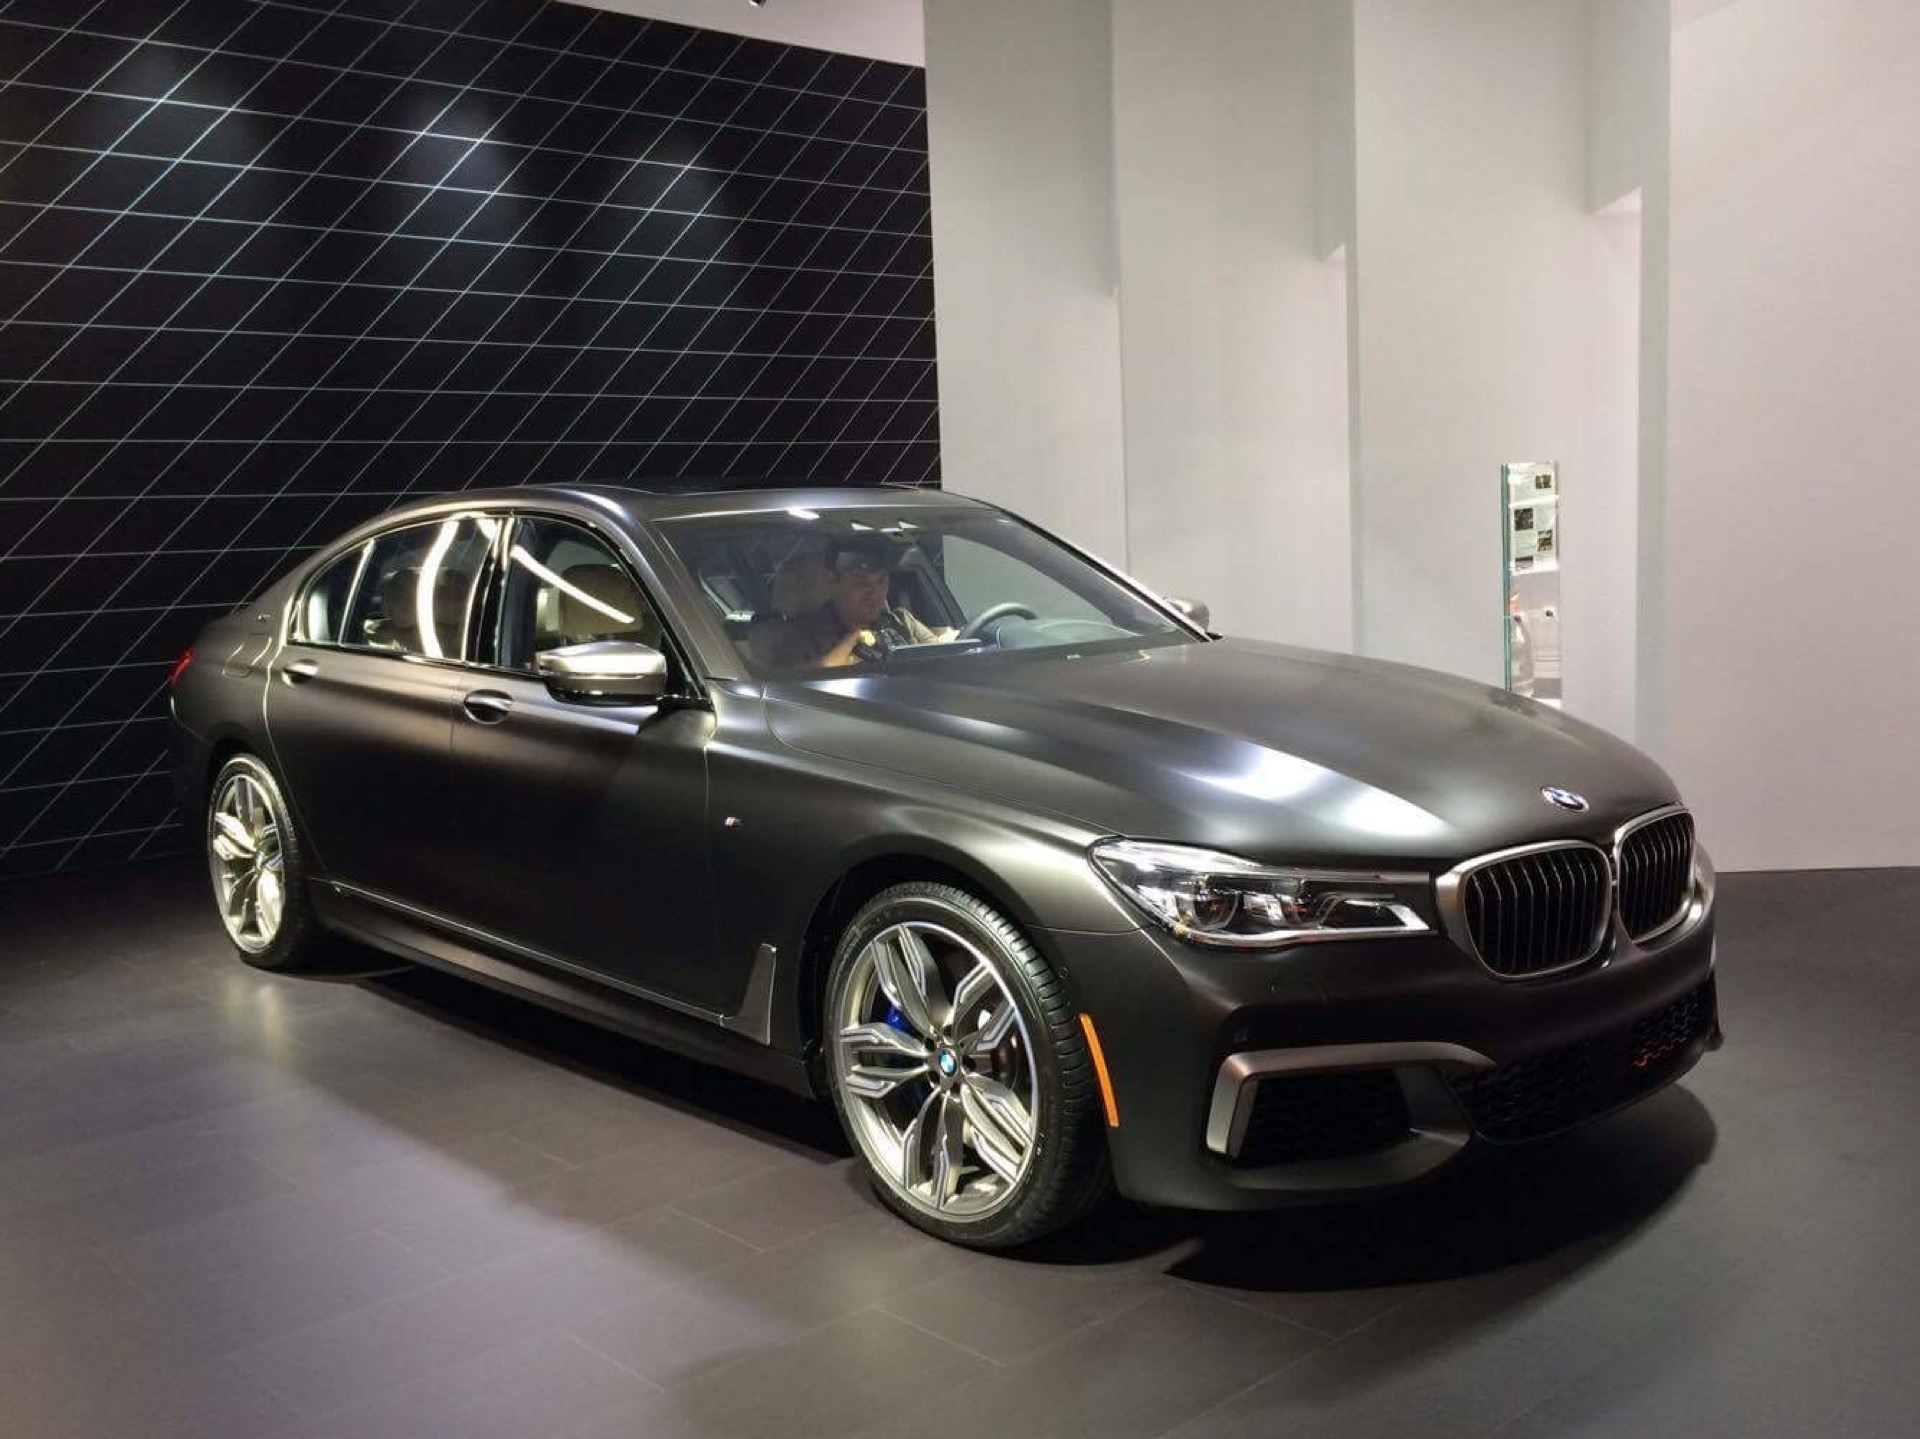 2016 LA Auto Show: BMW Lineup